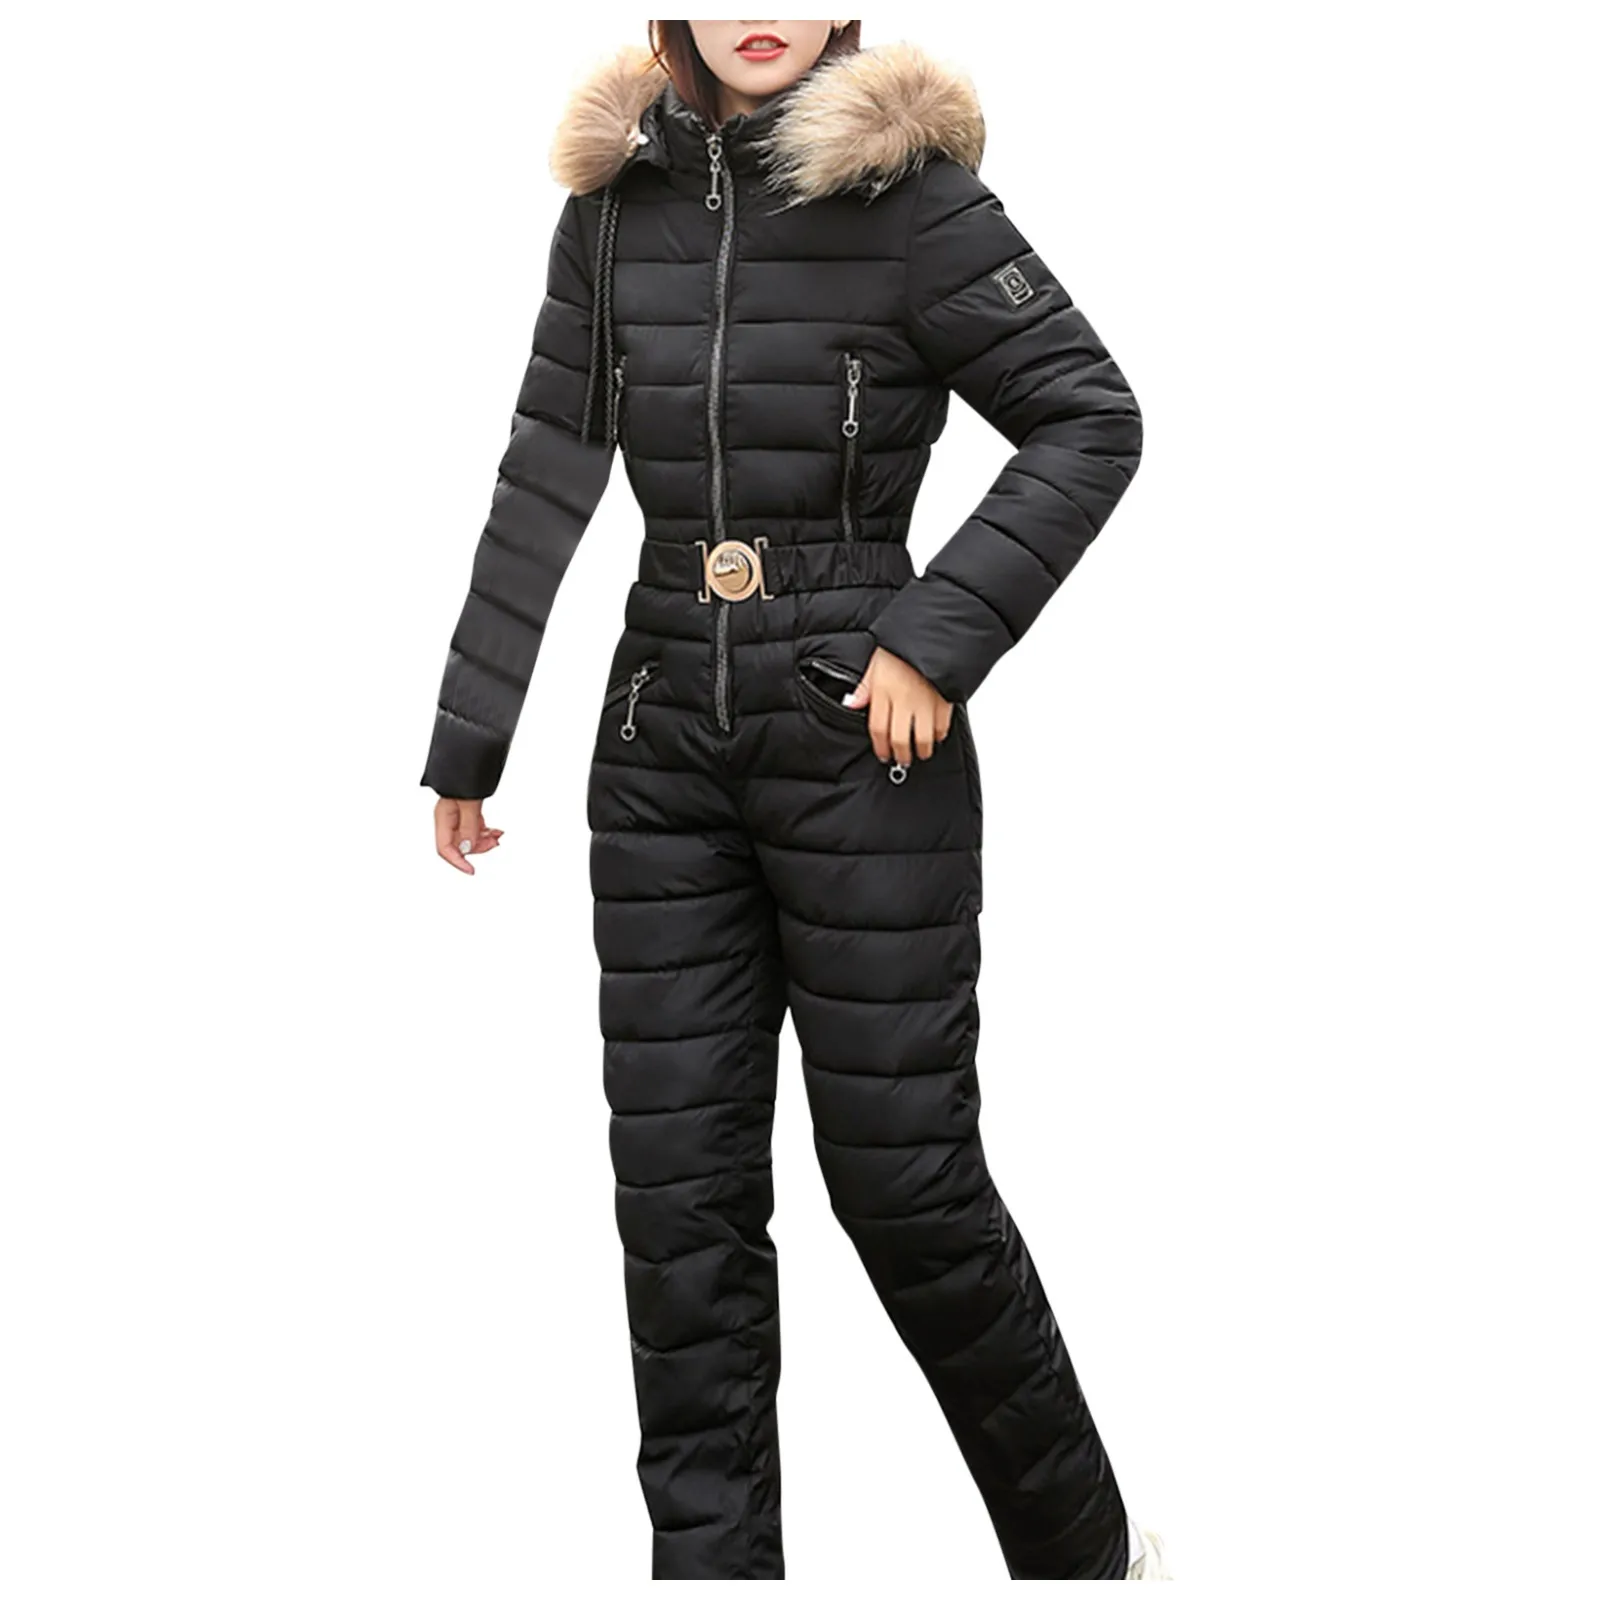 One Piece Ski Suit Women Jackets Winter Hooded Parka Jumpsuit Women Cotton bodysuit Sashes Jumpsuits Zipper Overalls Tracksuits